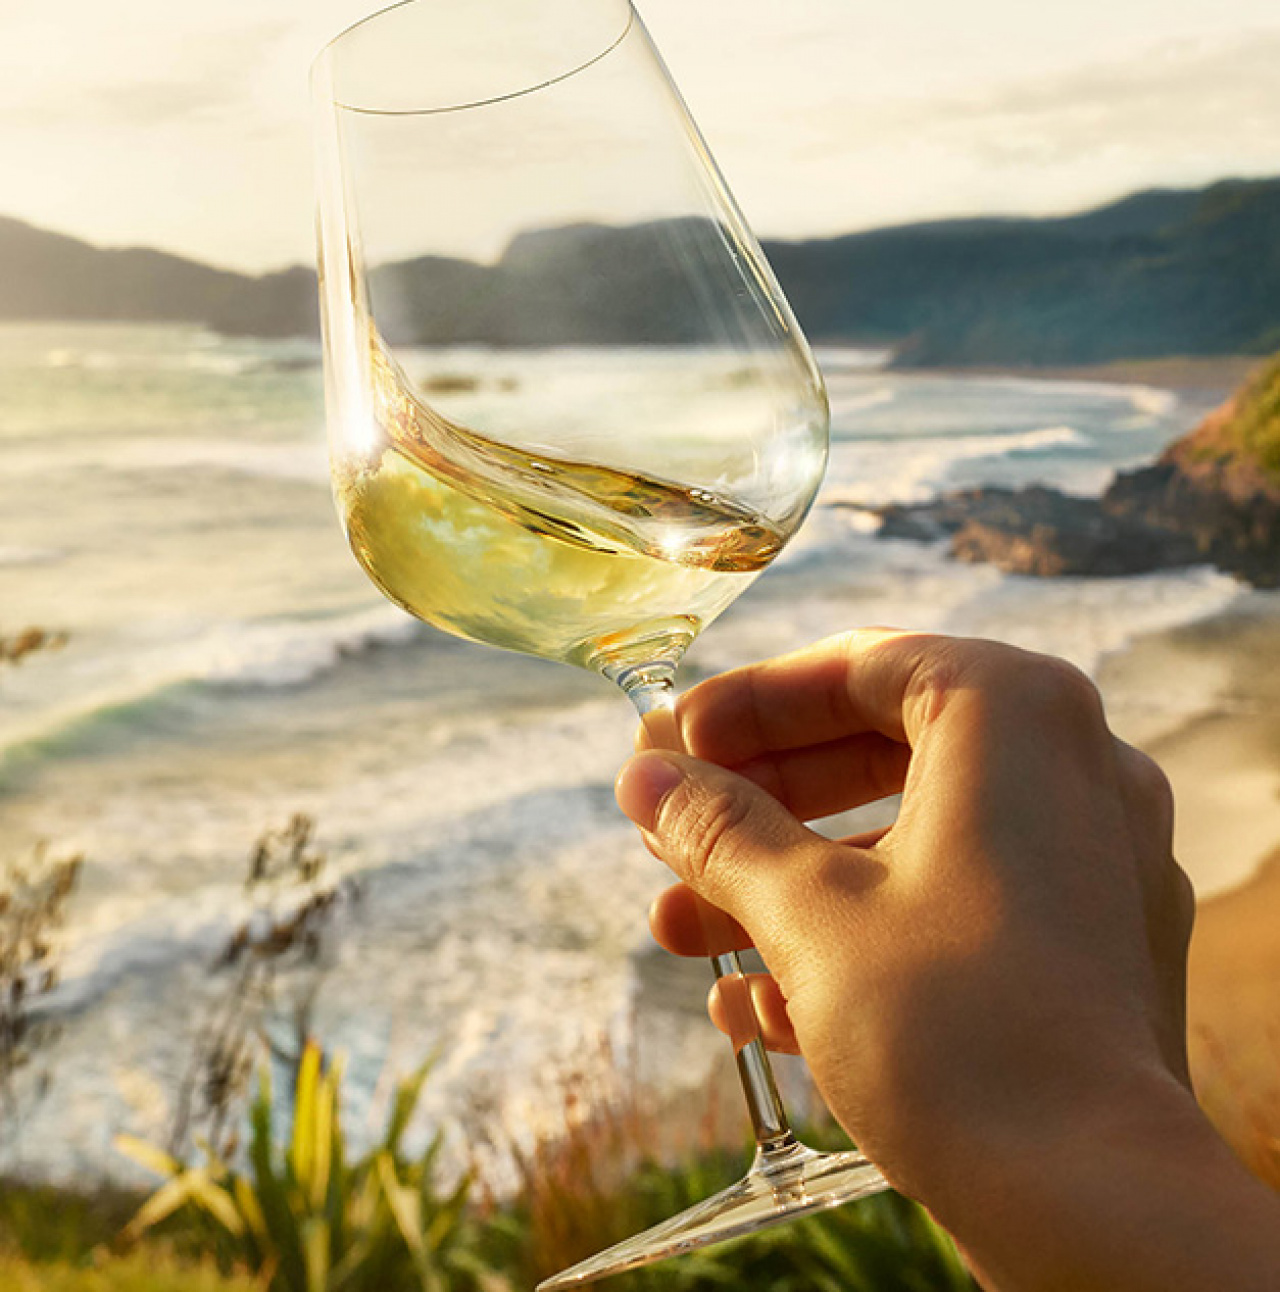 Cloudy Bay Te Koko Sauvignon Blanc 2020 - The Good Wine Co.